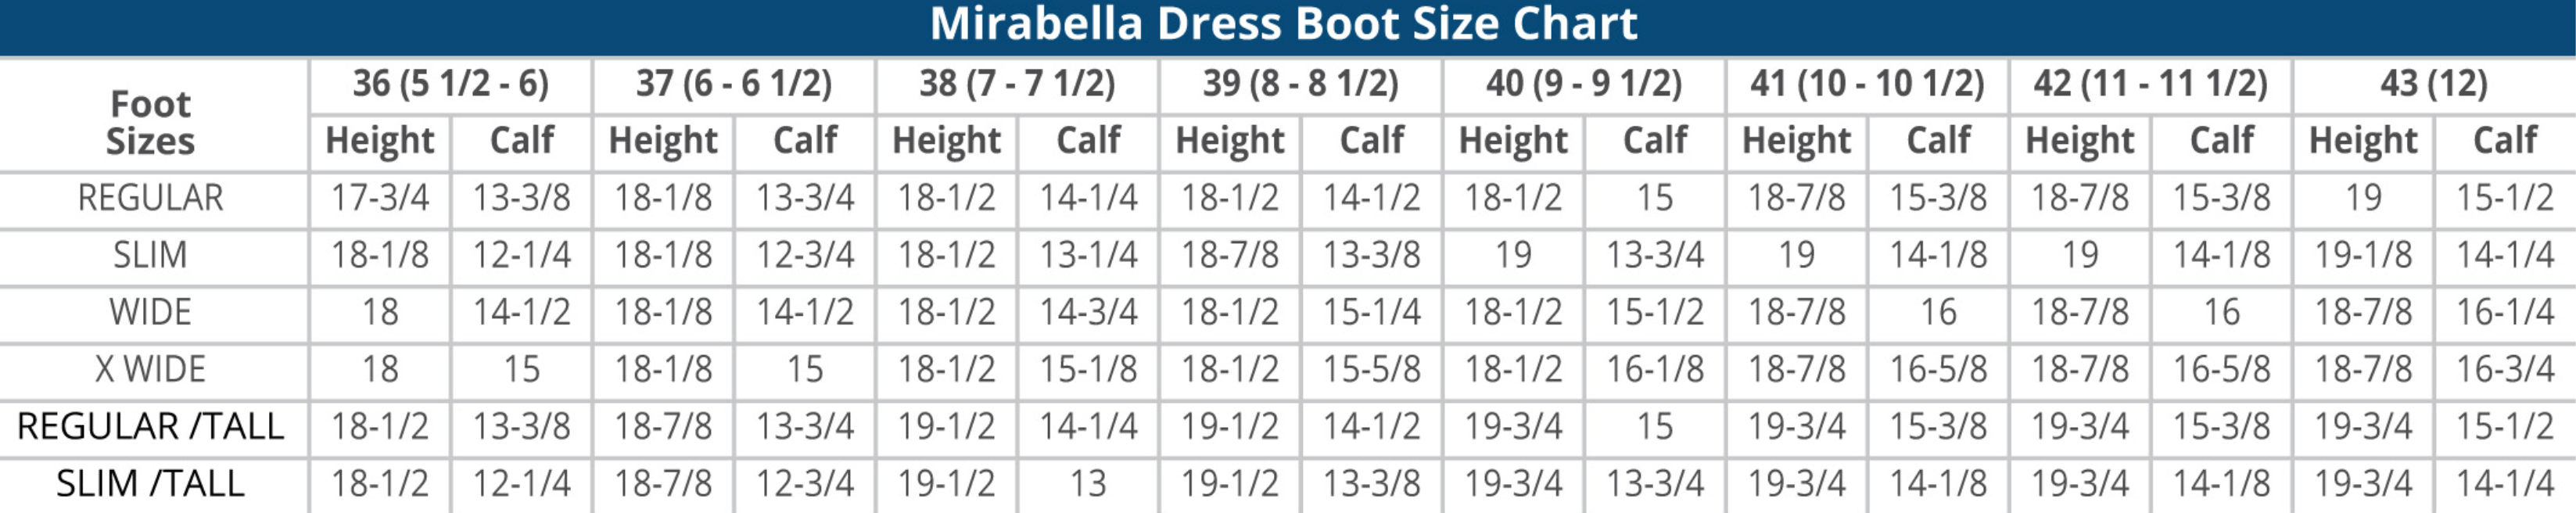 ovation mirabella dress boot